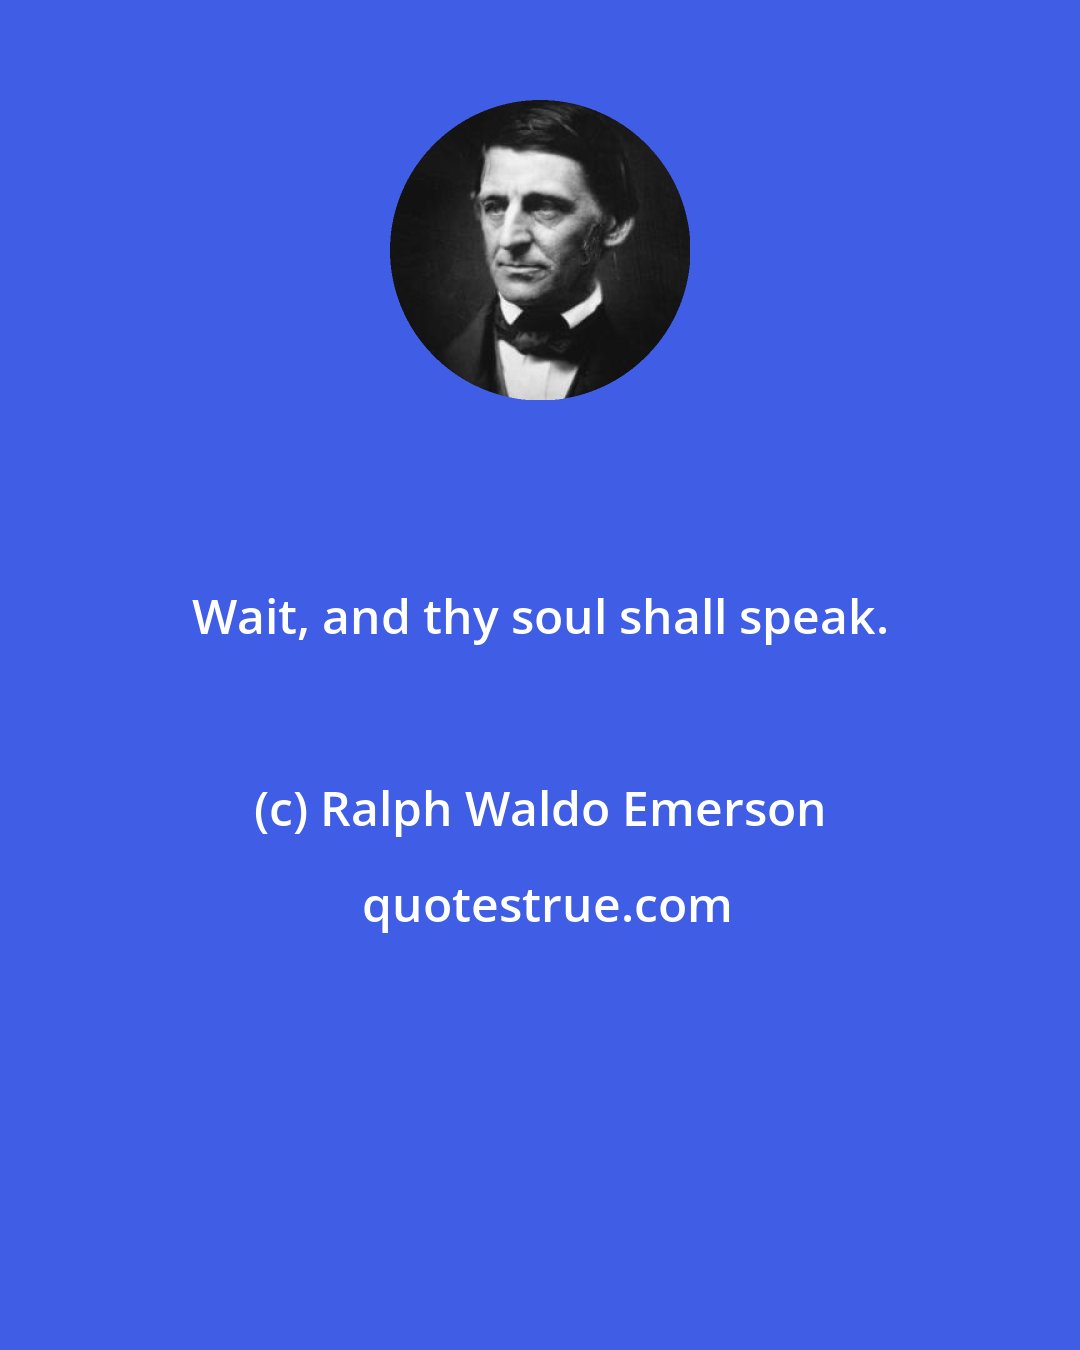 Ralph Waldo Emerson: Wait, and thy soul shall speak.